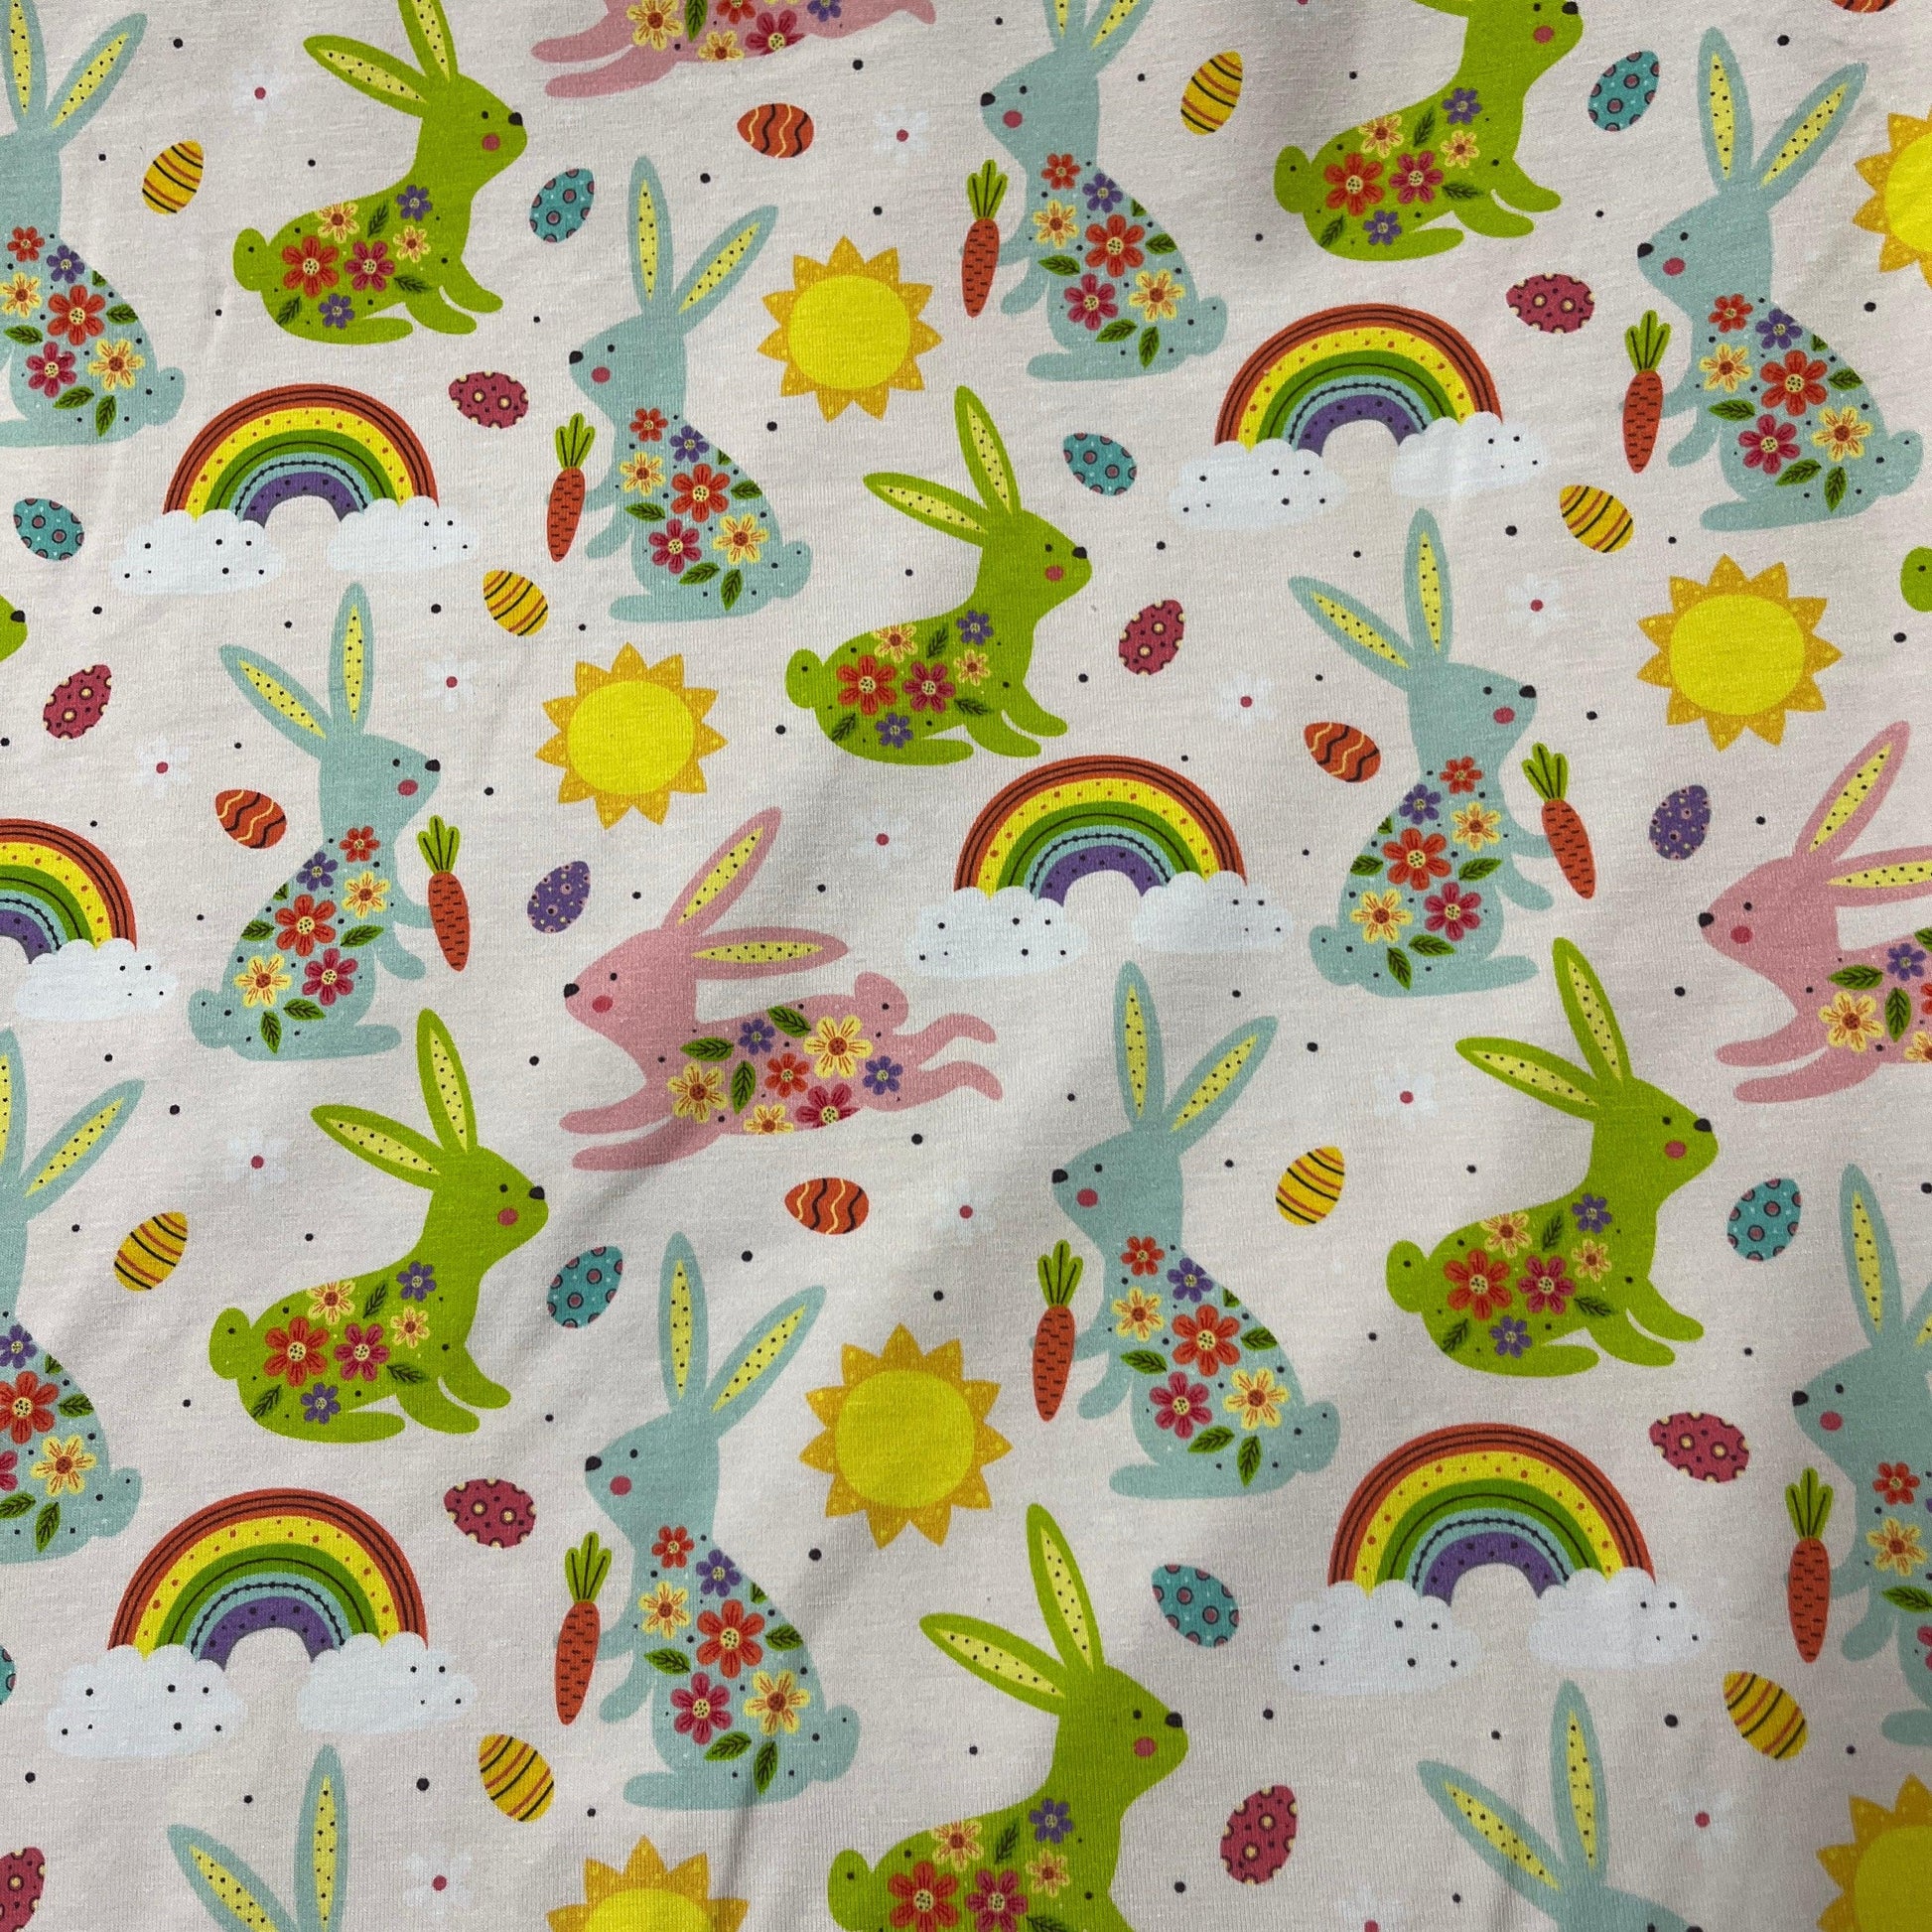 Bunnies and Rainbows on Bamboo/Spandex Jersey Fabric - Nature's Fabrics